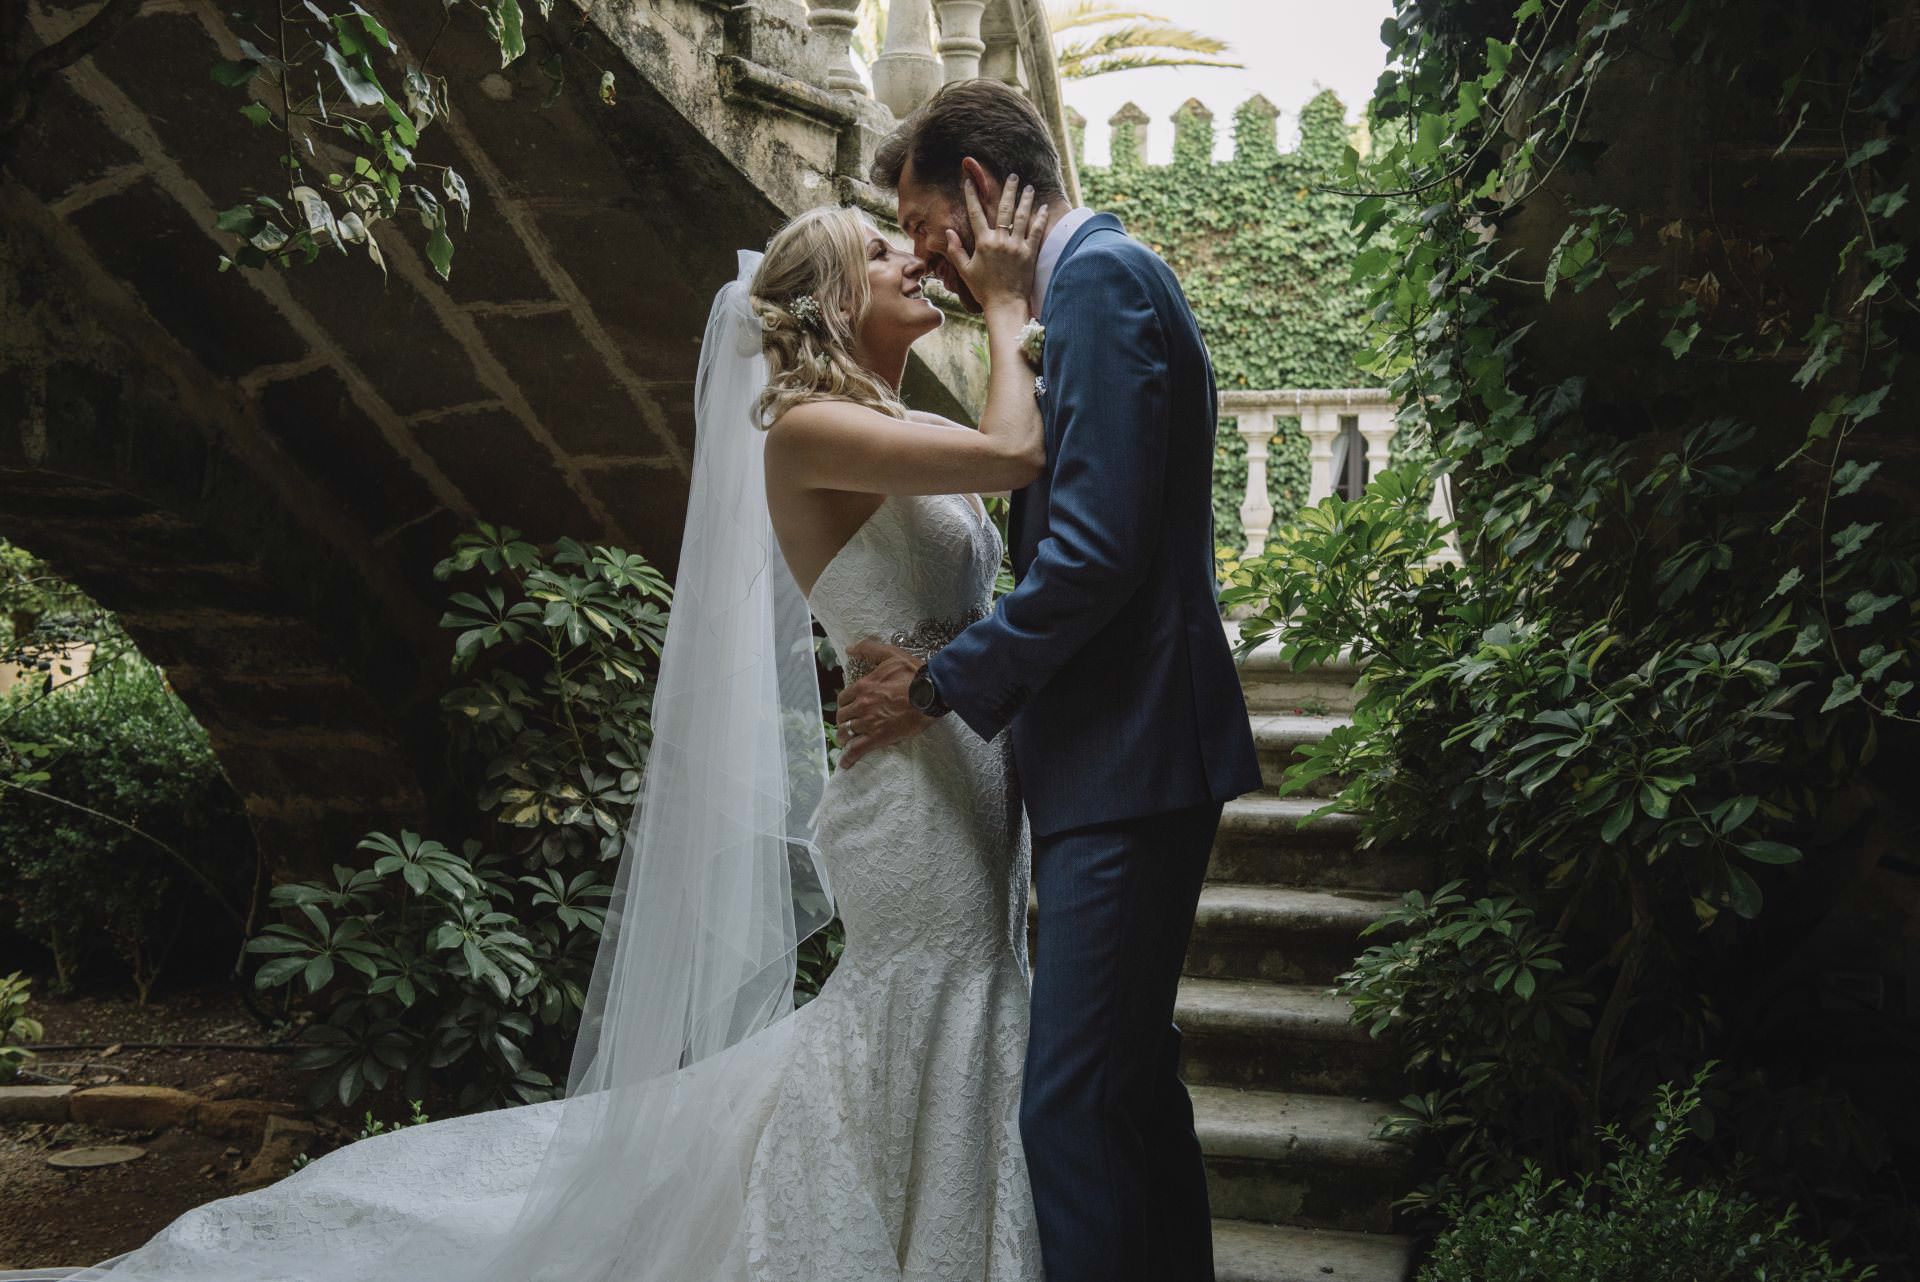 Castello Monaci bari Italy wedding photography